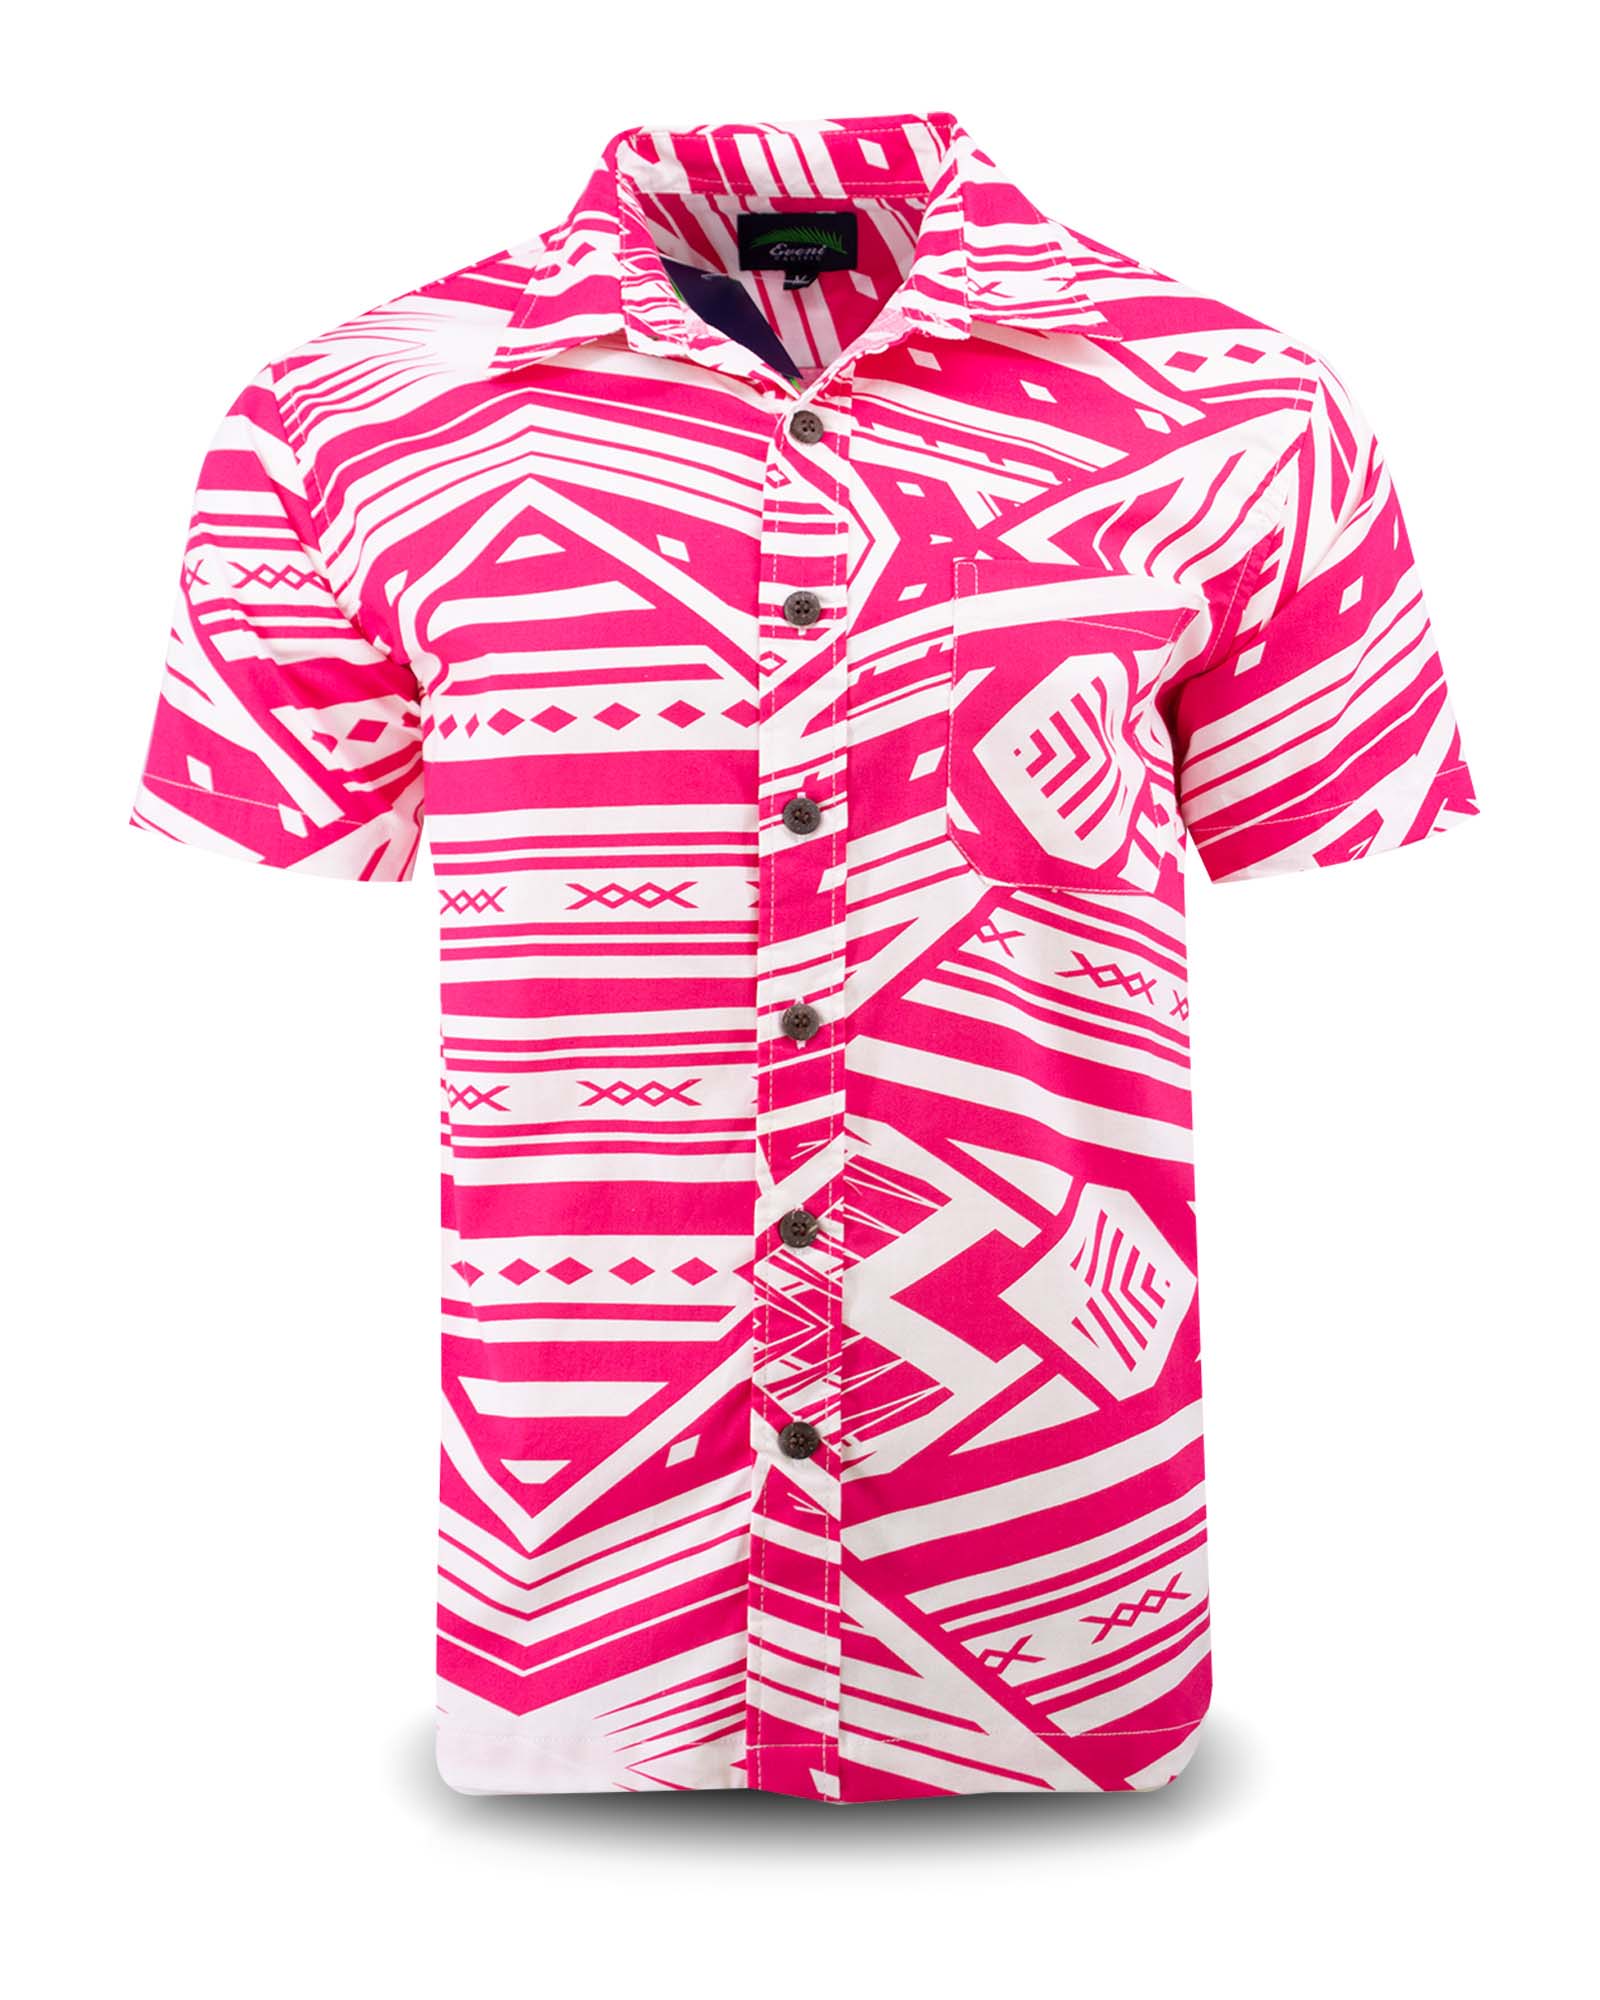 Eveni Pacific Men's Classic Shirt - Moonless Pink